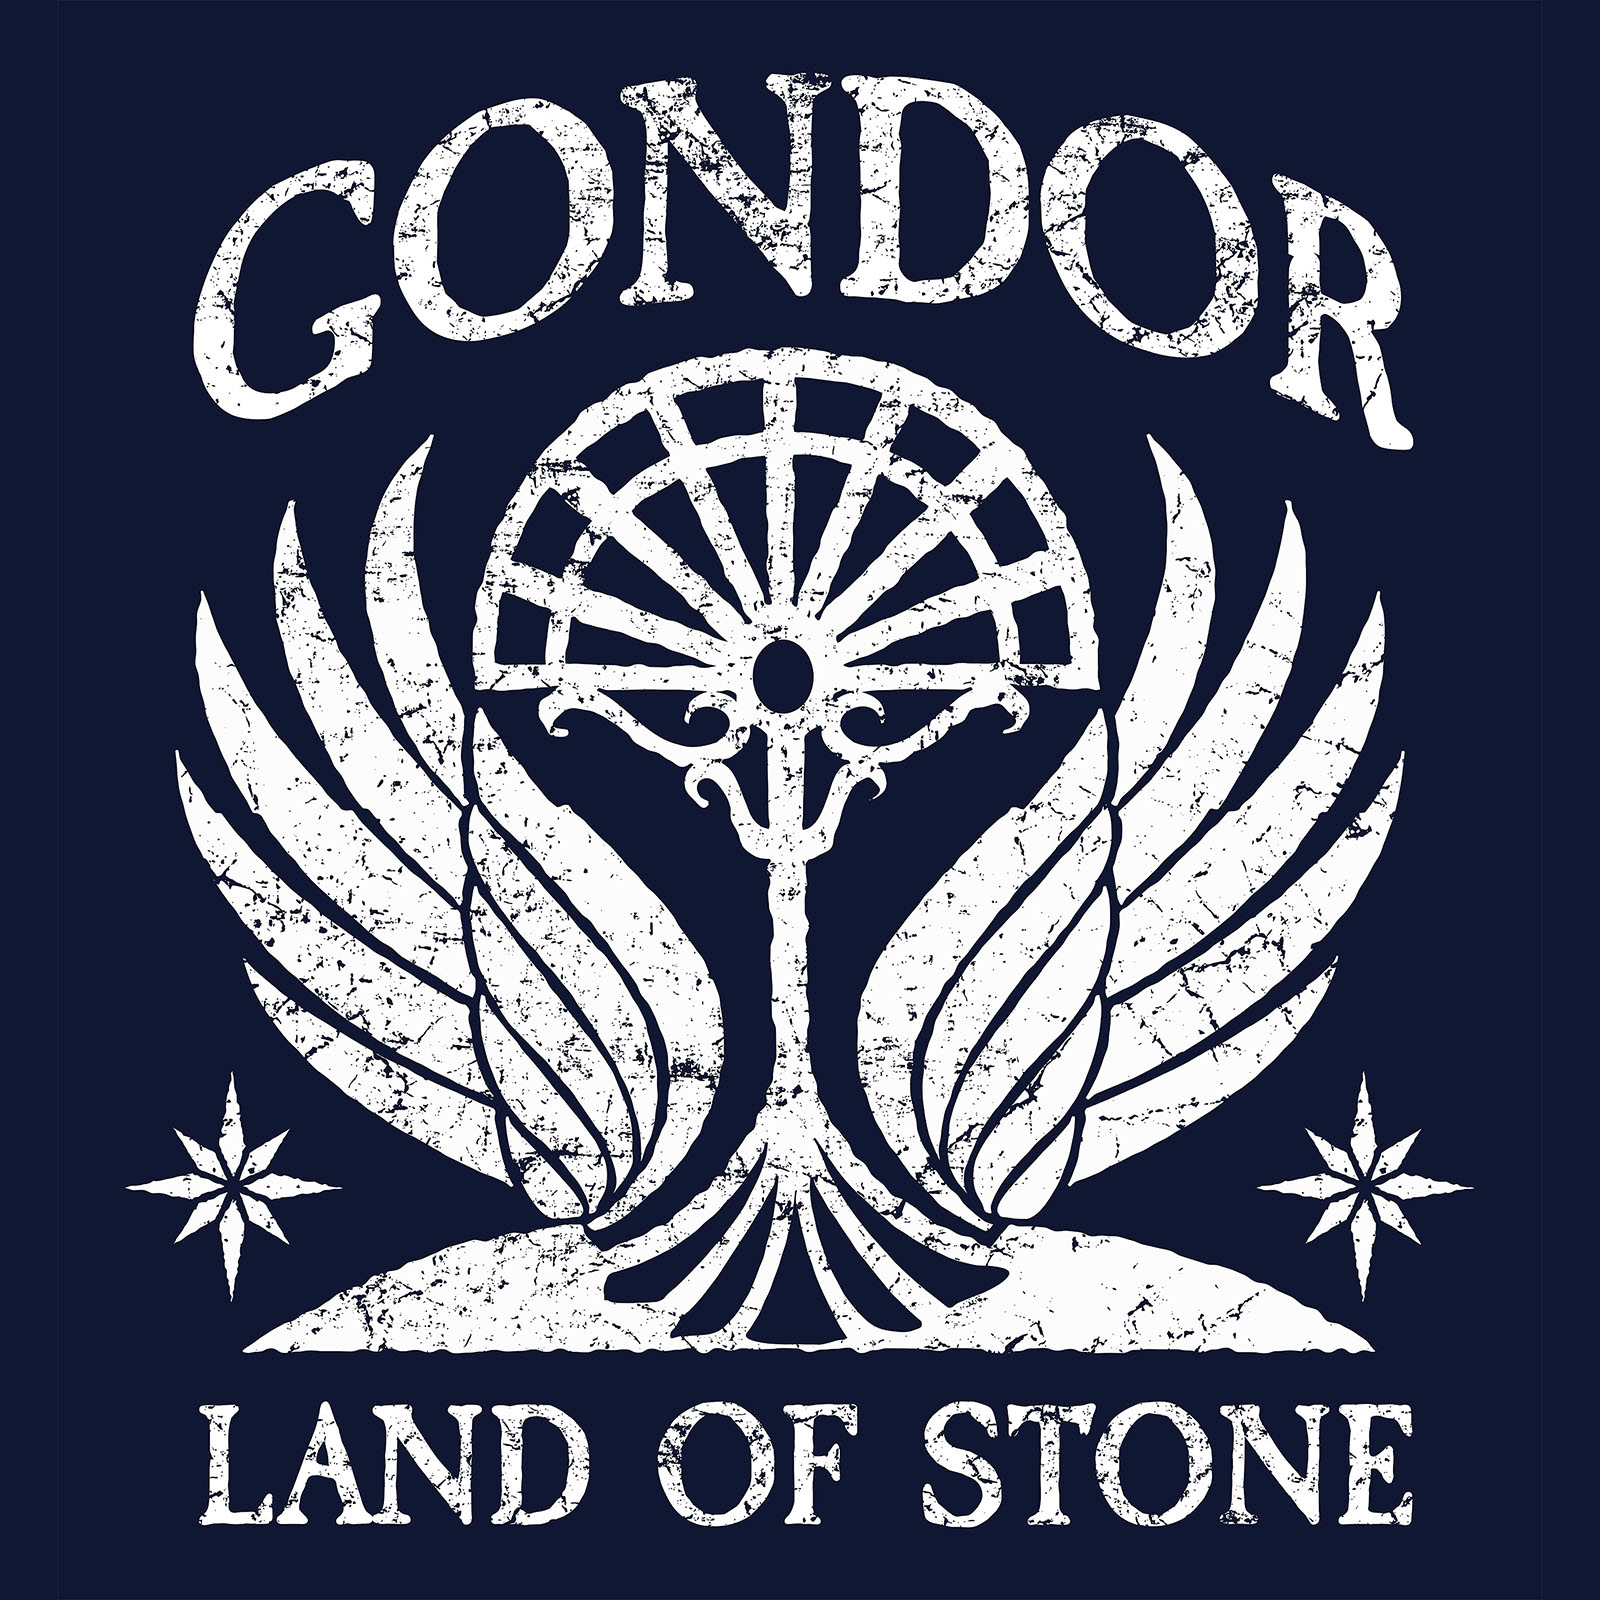 Herr der Ringe - Gondor T-Shirt blau